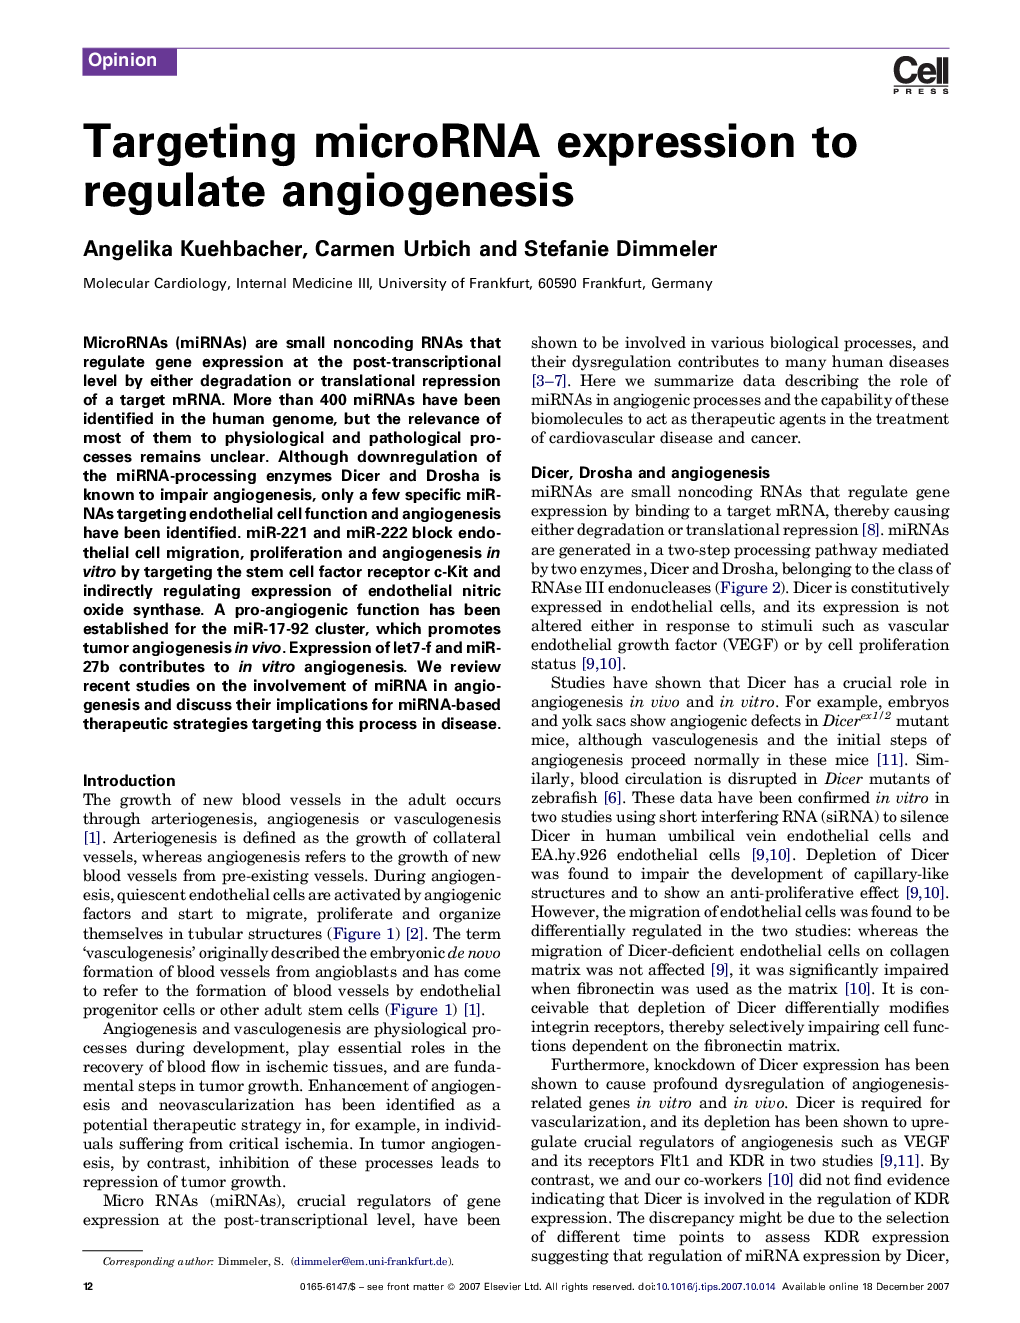 Targeting microRNA expression to regulate angiogenesis